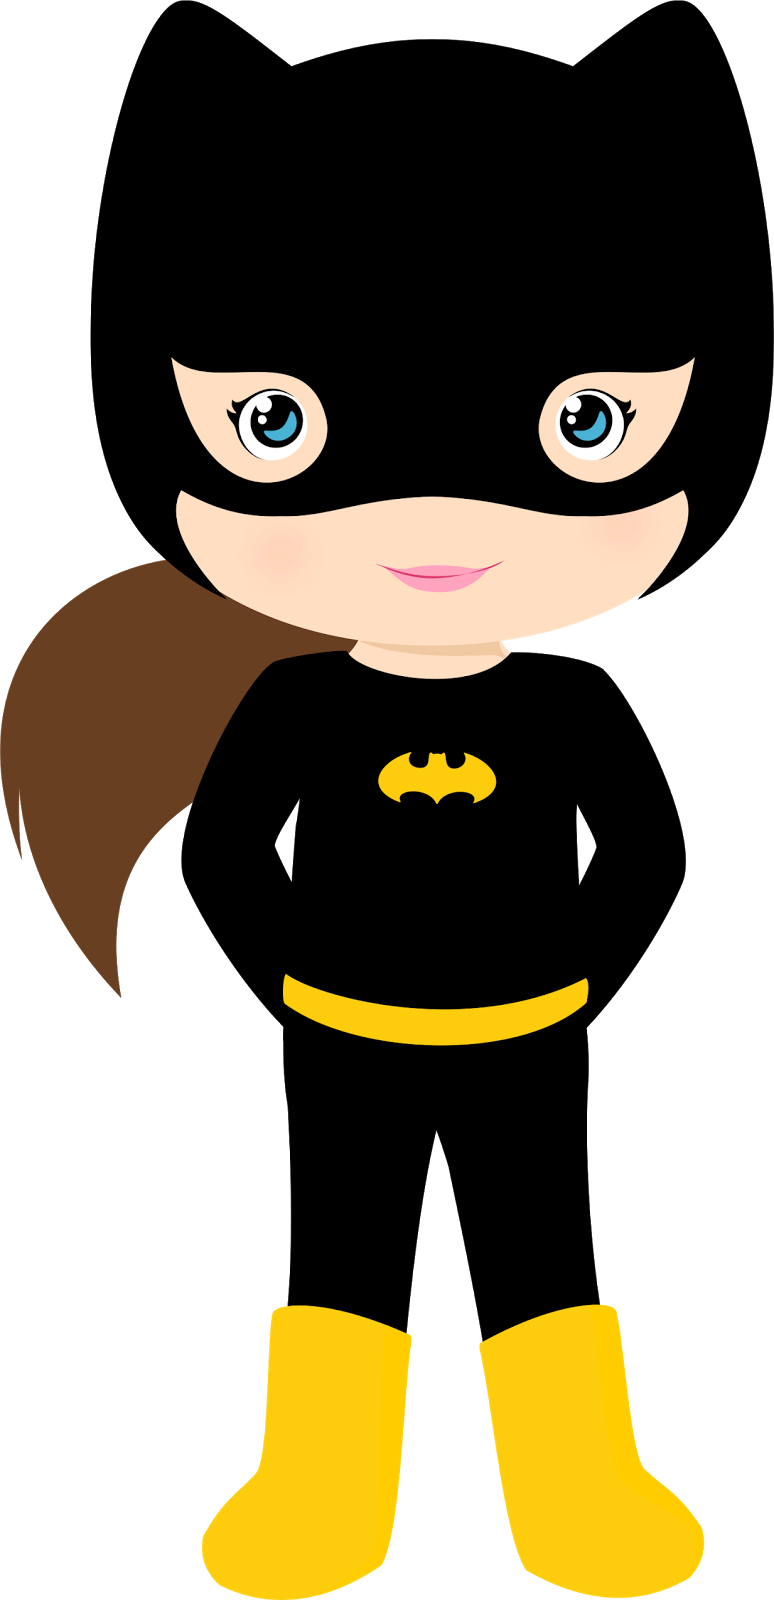 Characters of Batman Kids Version Clip Art. - Oh My Fiesta! for Geeks